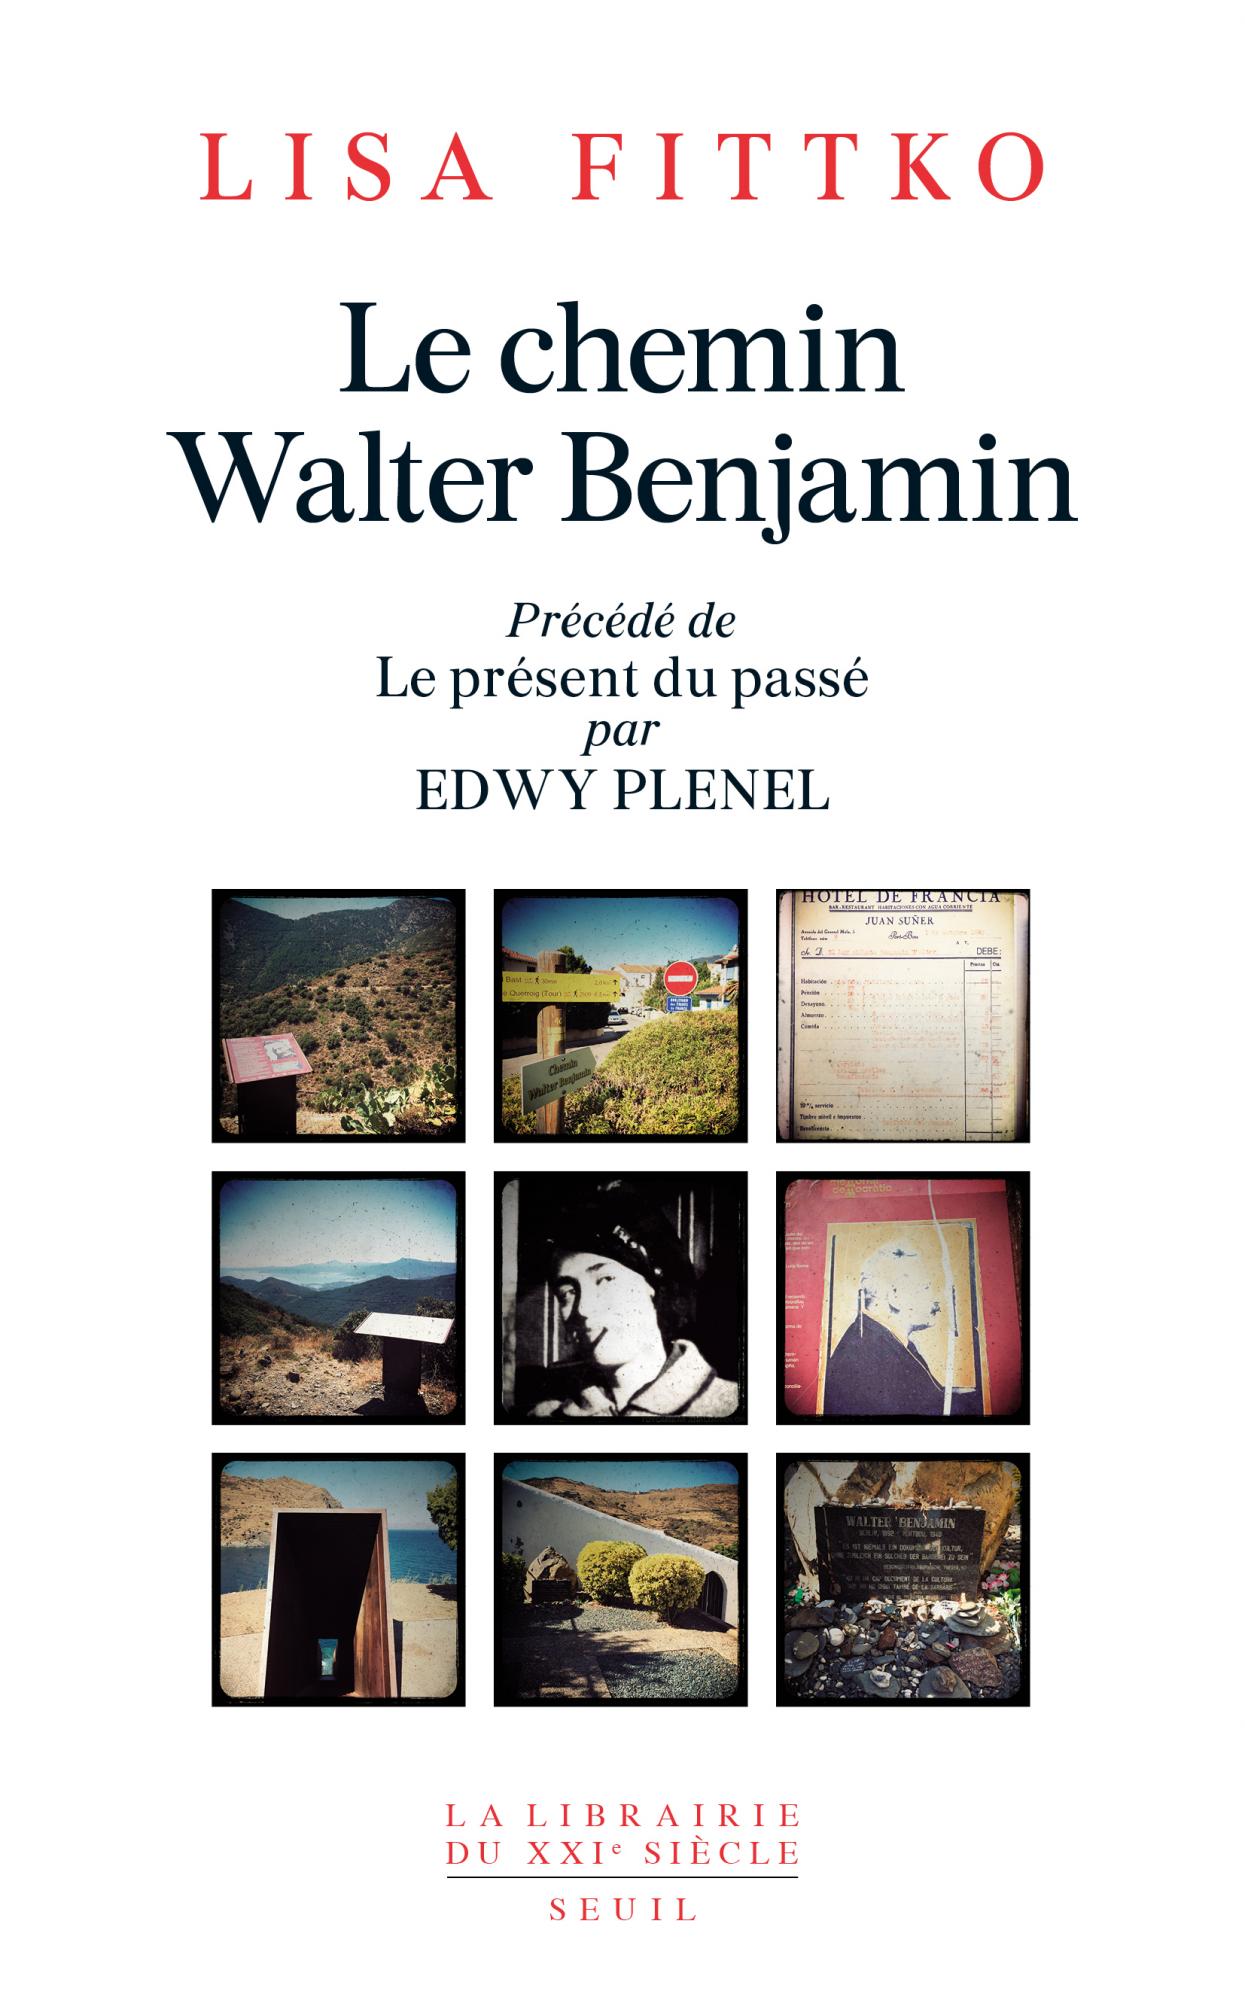 L. Fittko, Le Chemin Walter Benjamin. Souvenirs 1940-1941 (rééd.)